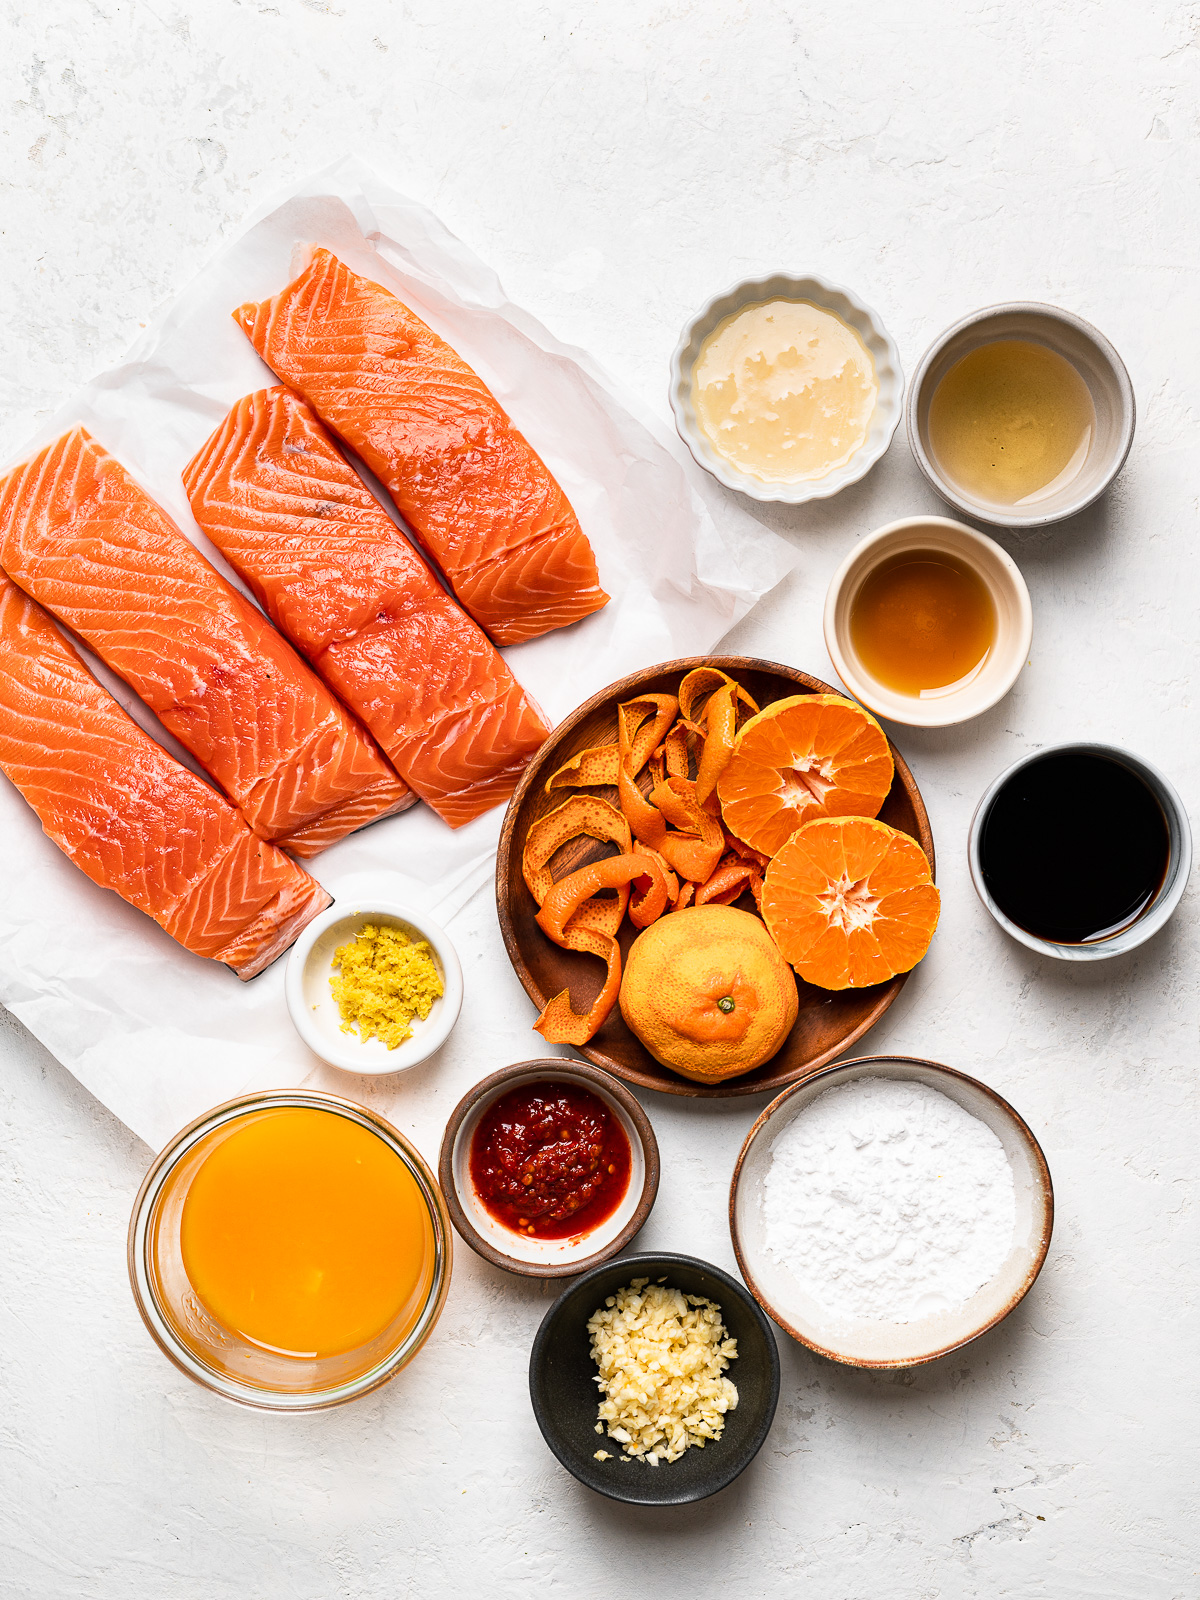 Ingredients for tangerine salmon